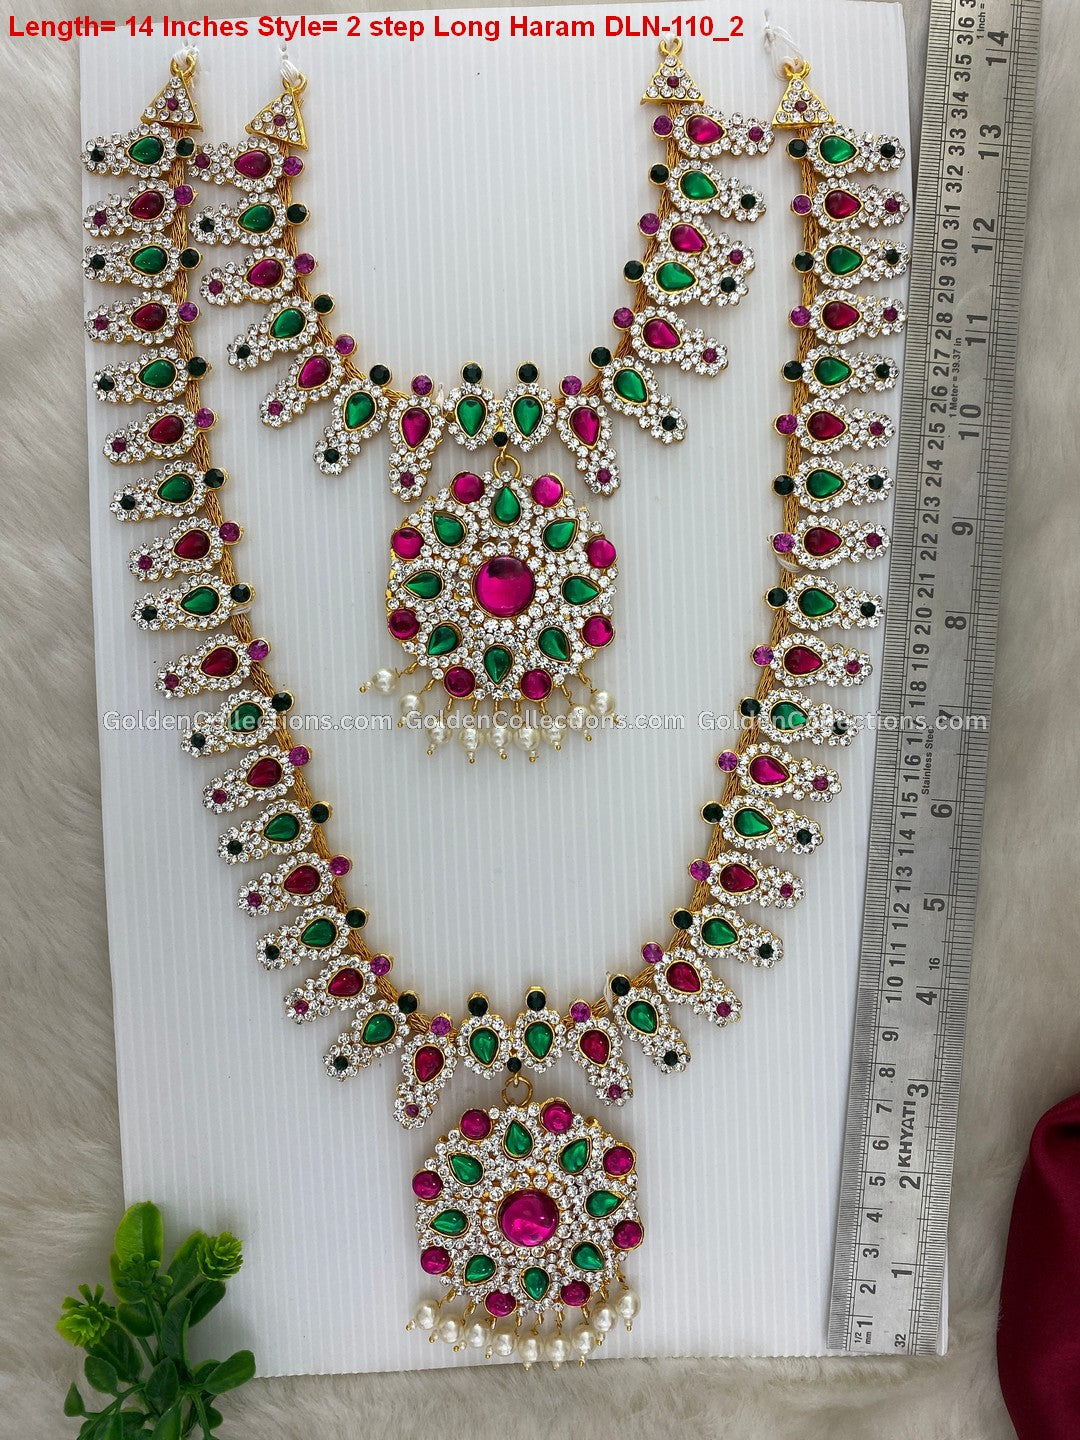 Exquisite Amman Long Necklace - DLN-110 2